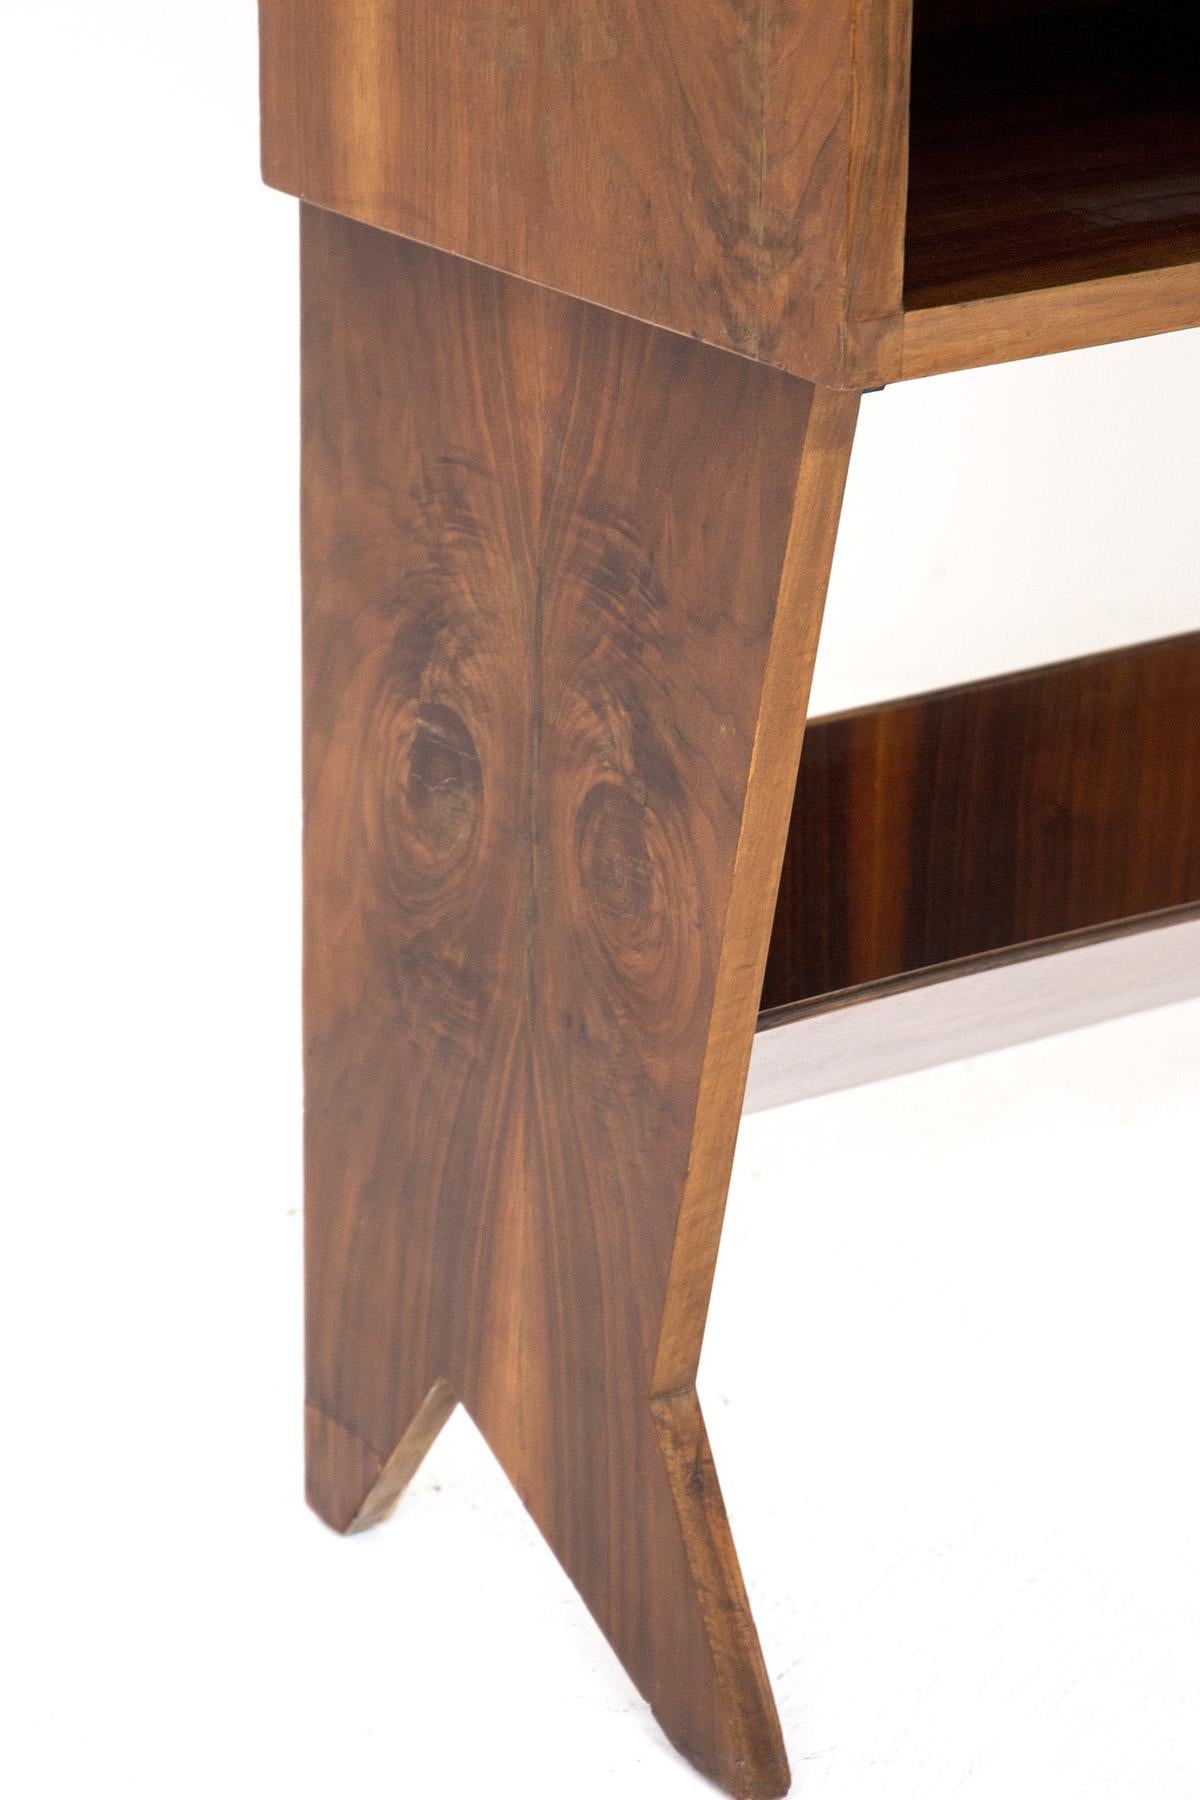 mid century furniture wood types